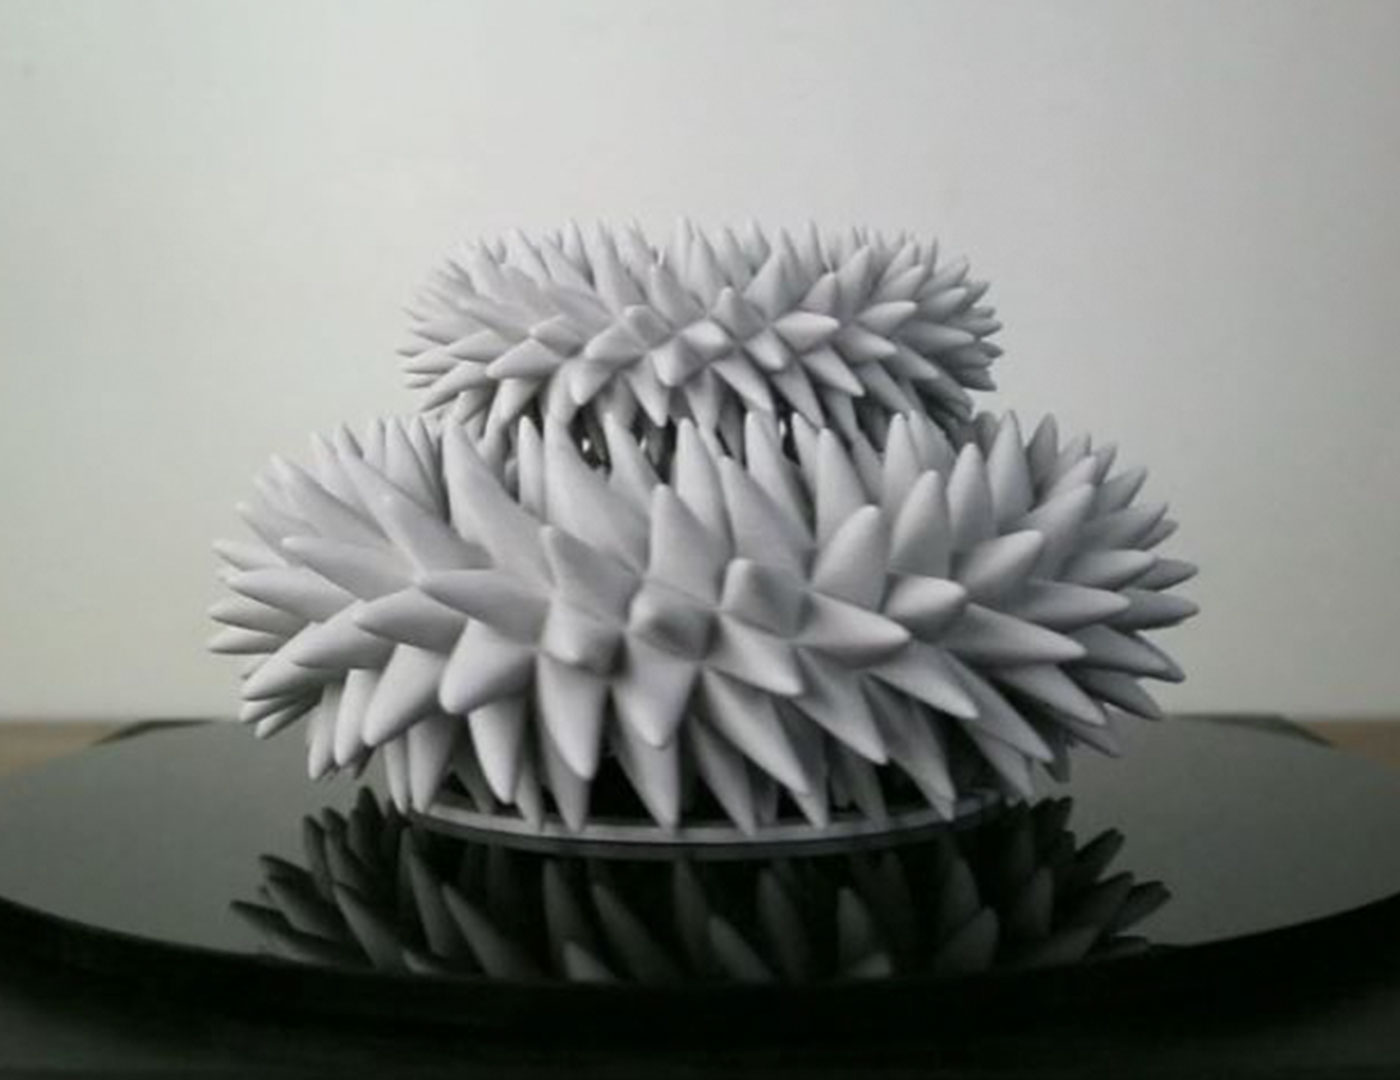 3D-Printed Sculptures 'Bloom' Under A Strobe Light